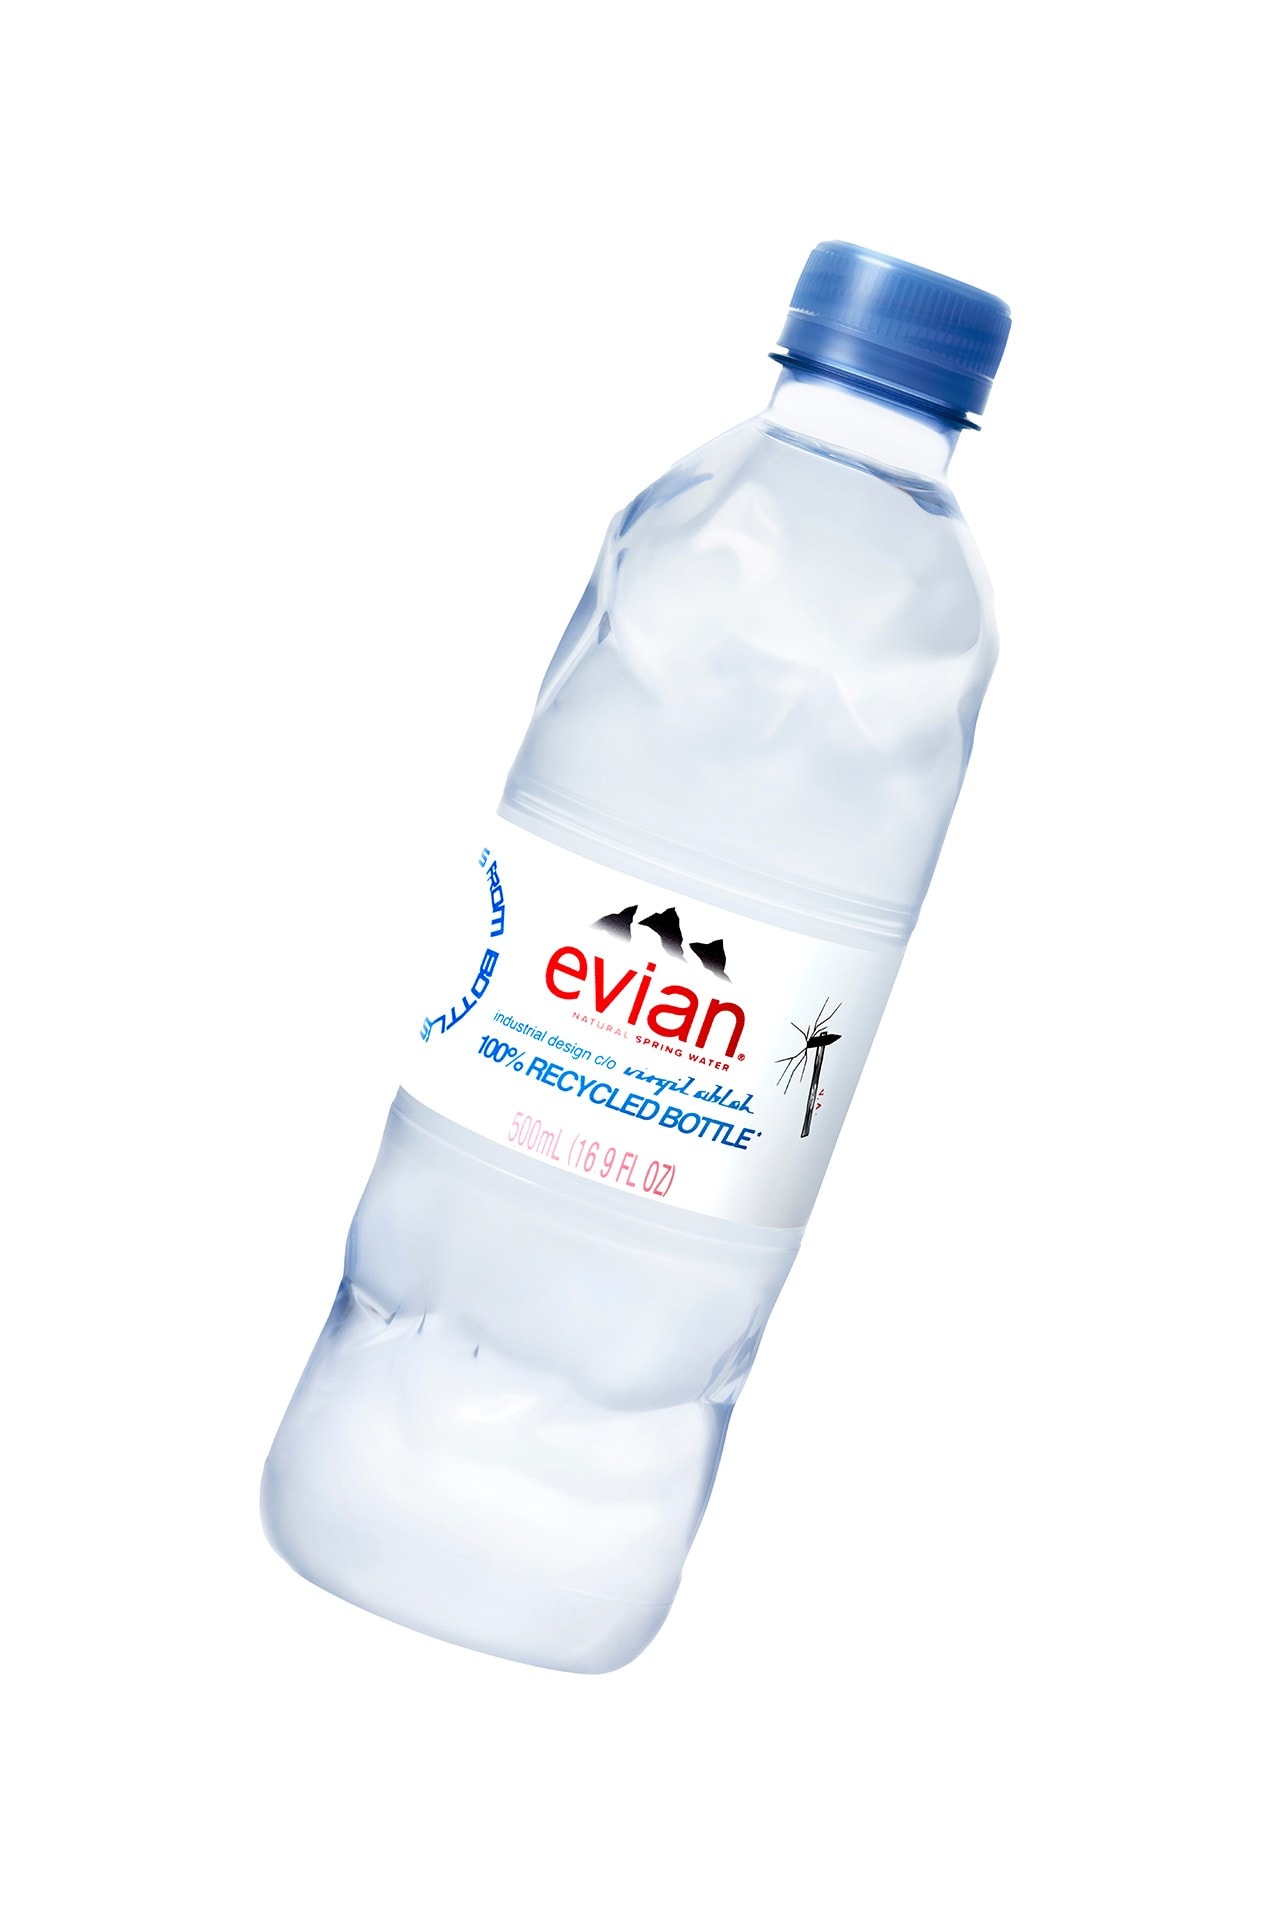 Evian x Virgil Abloh 全新瓶裝水設計正式登場